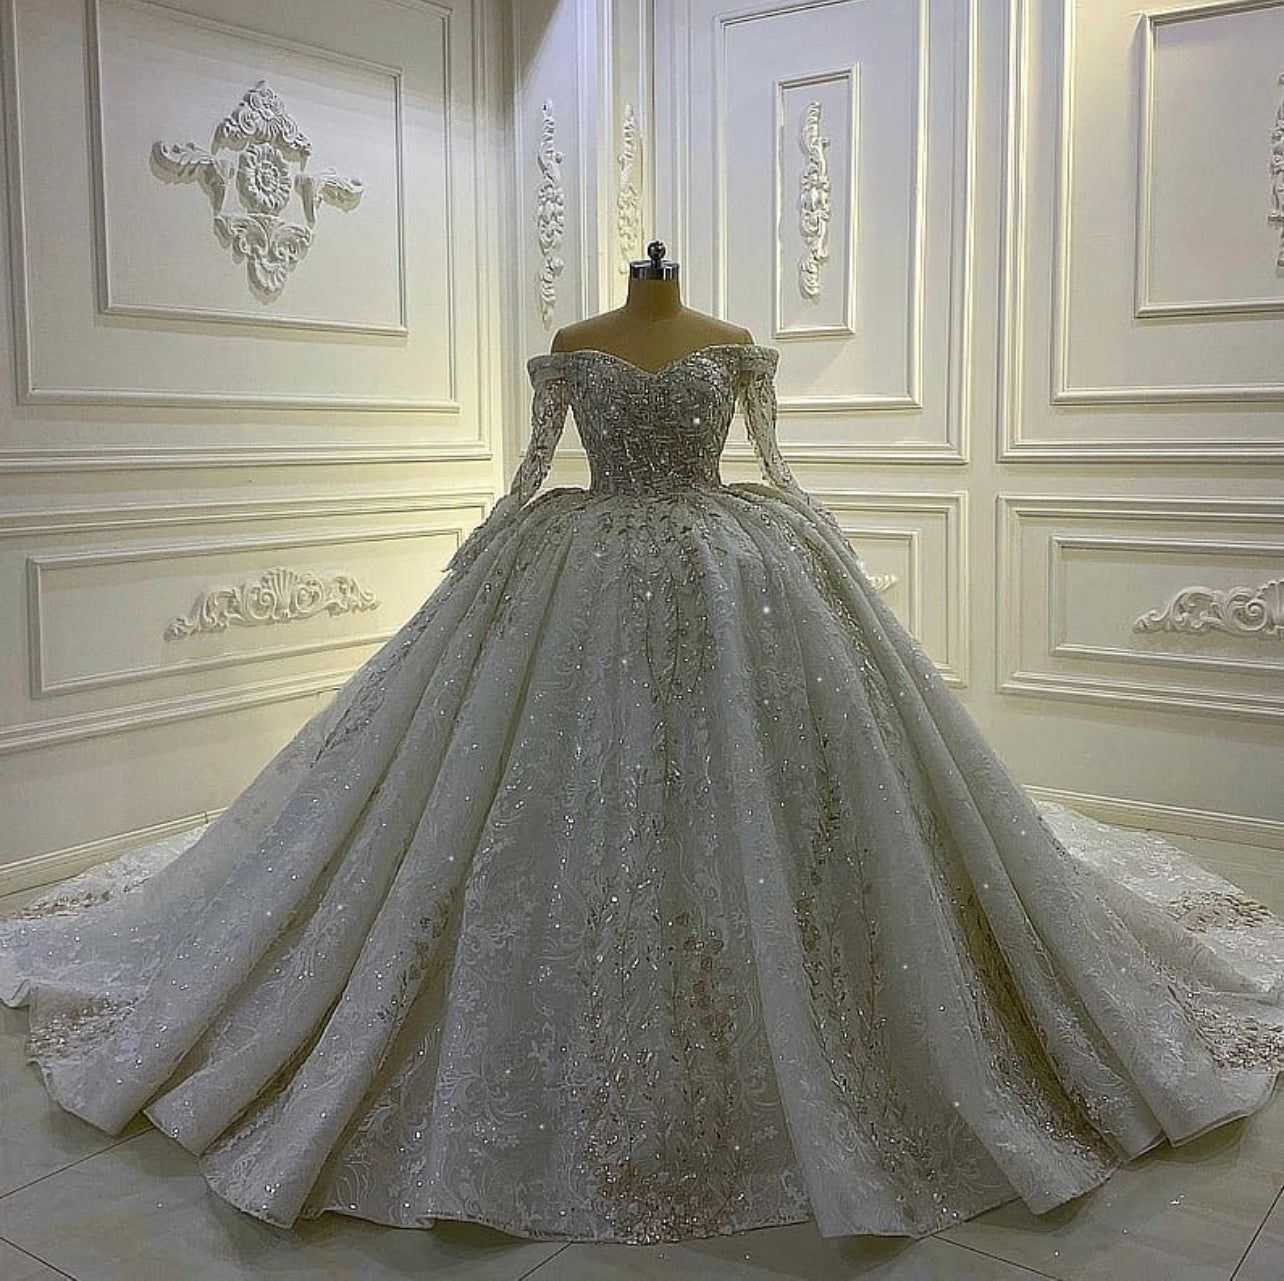 Novella Wedding Dress 51839 from MGNY | Lace sleeves